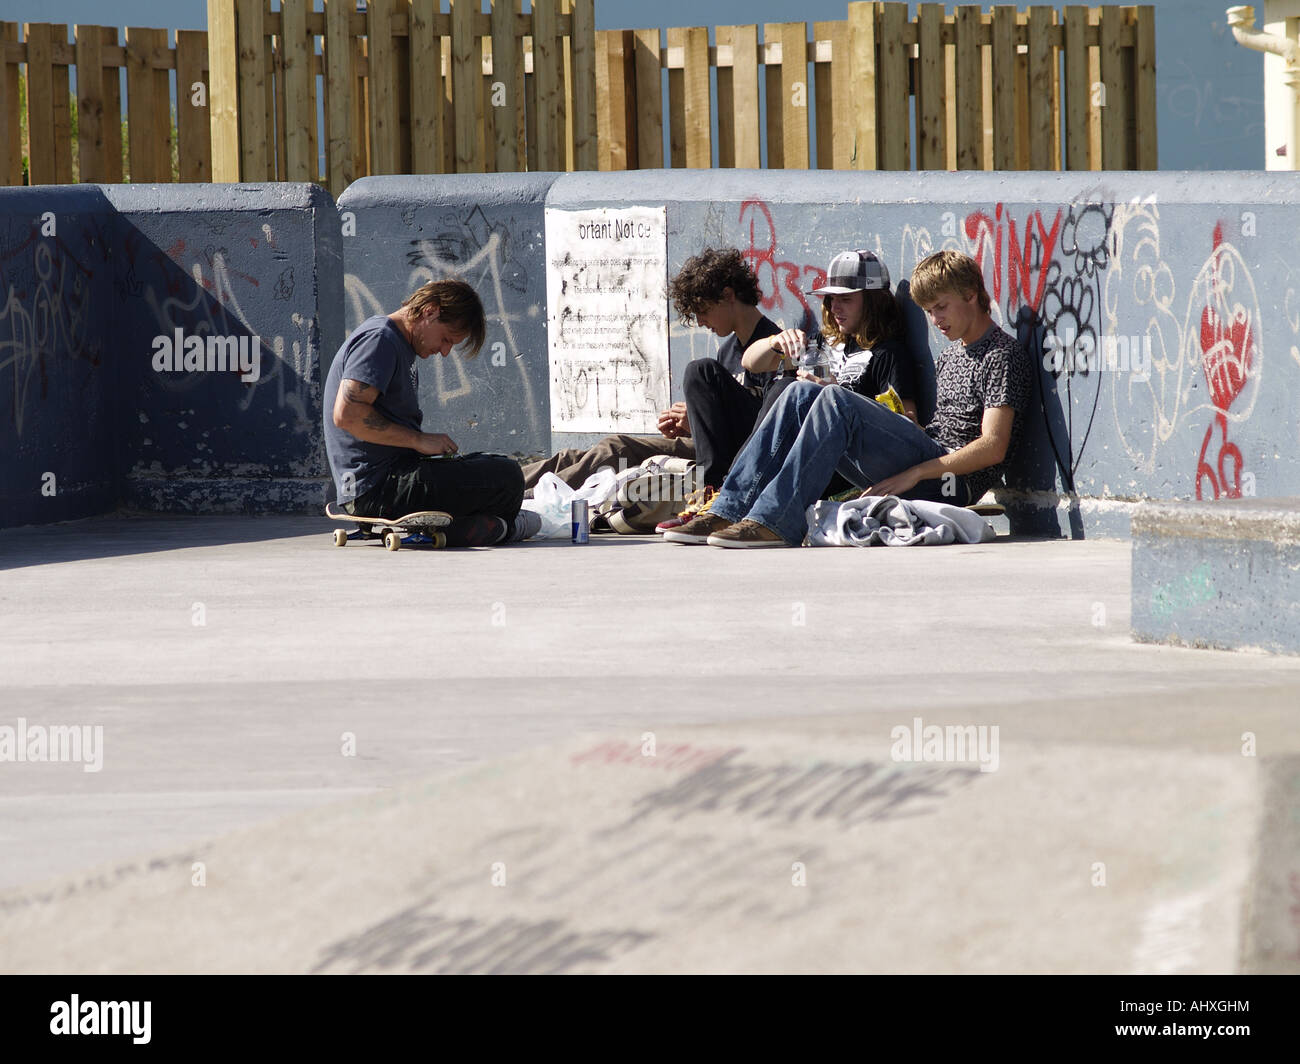 Quattro adolescenti maschi seduti insieme in un skate park Foto Stock